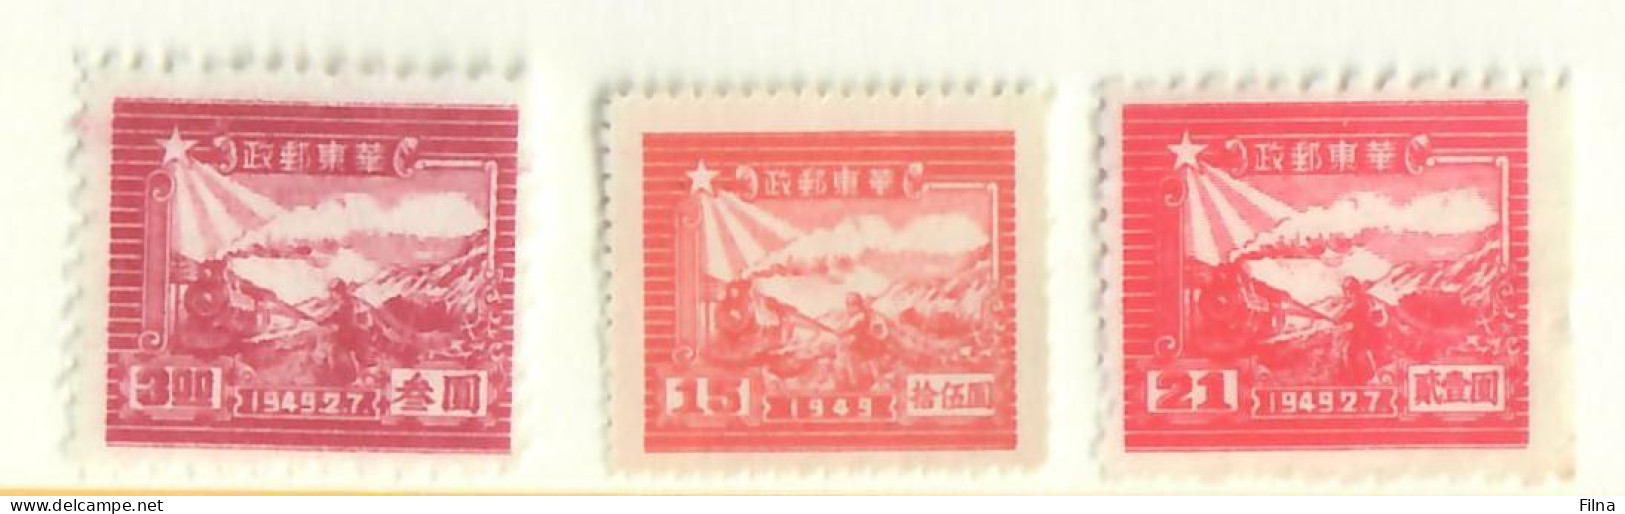 CINA ORIENTALE EAST CHINA 1949 FERROVIA 3 VALORI NUOVI - Chine Orientale 1949-50